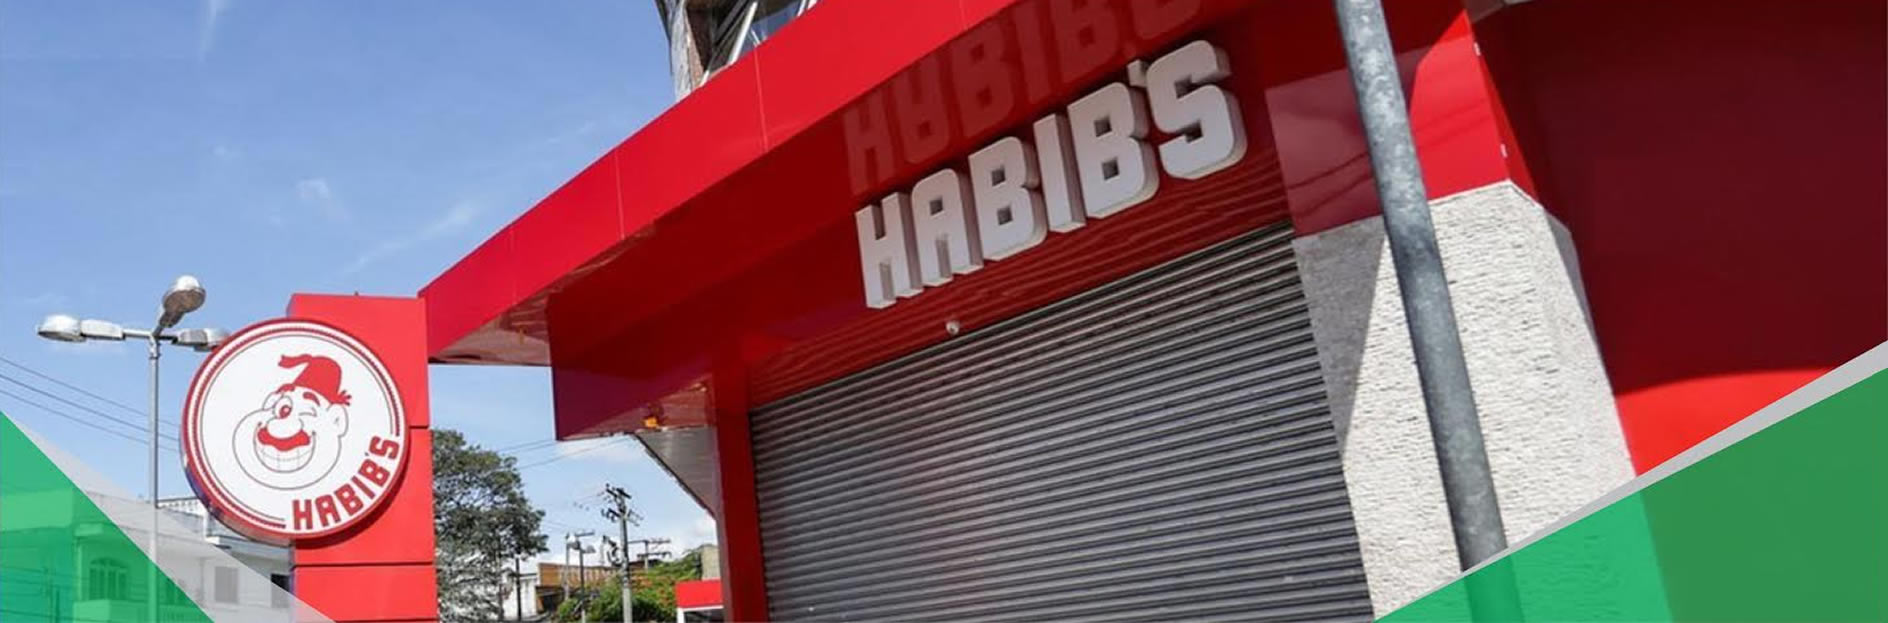 Habib's<br>